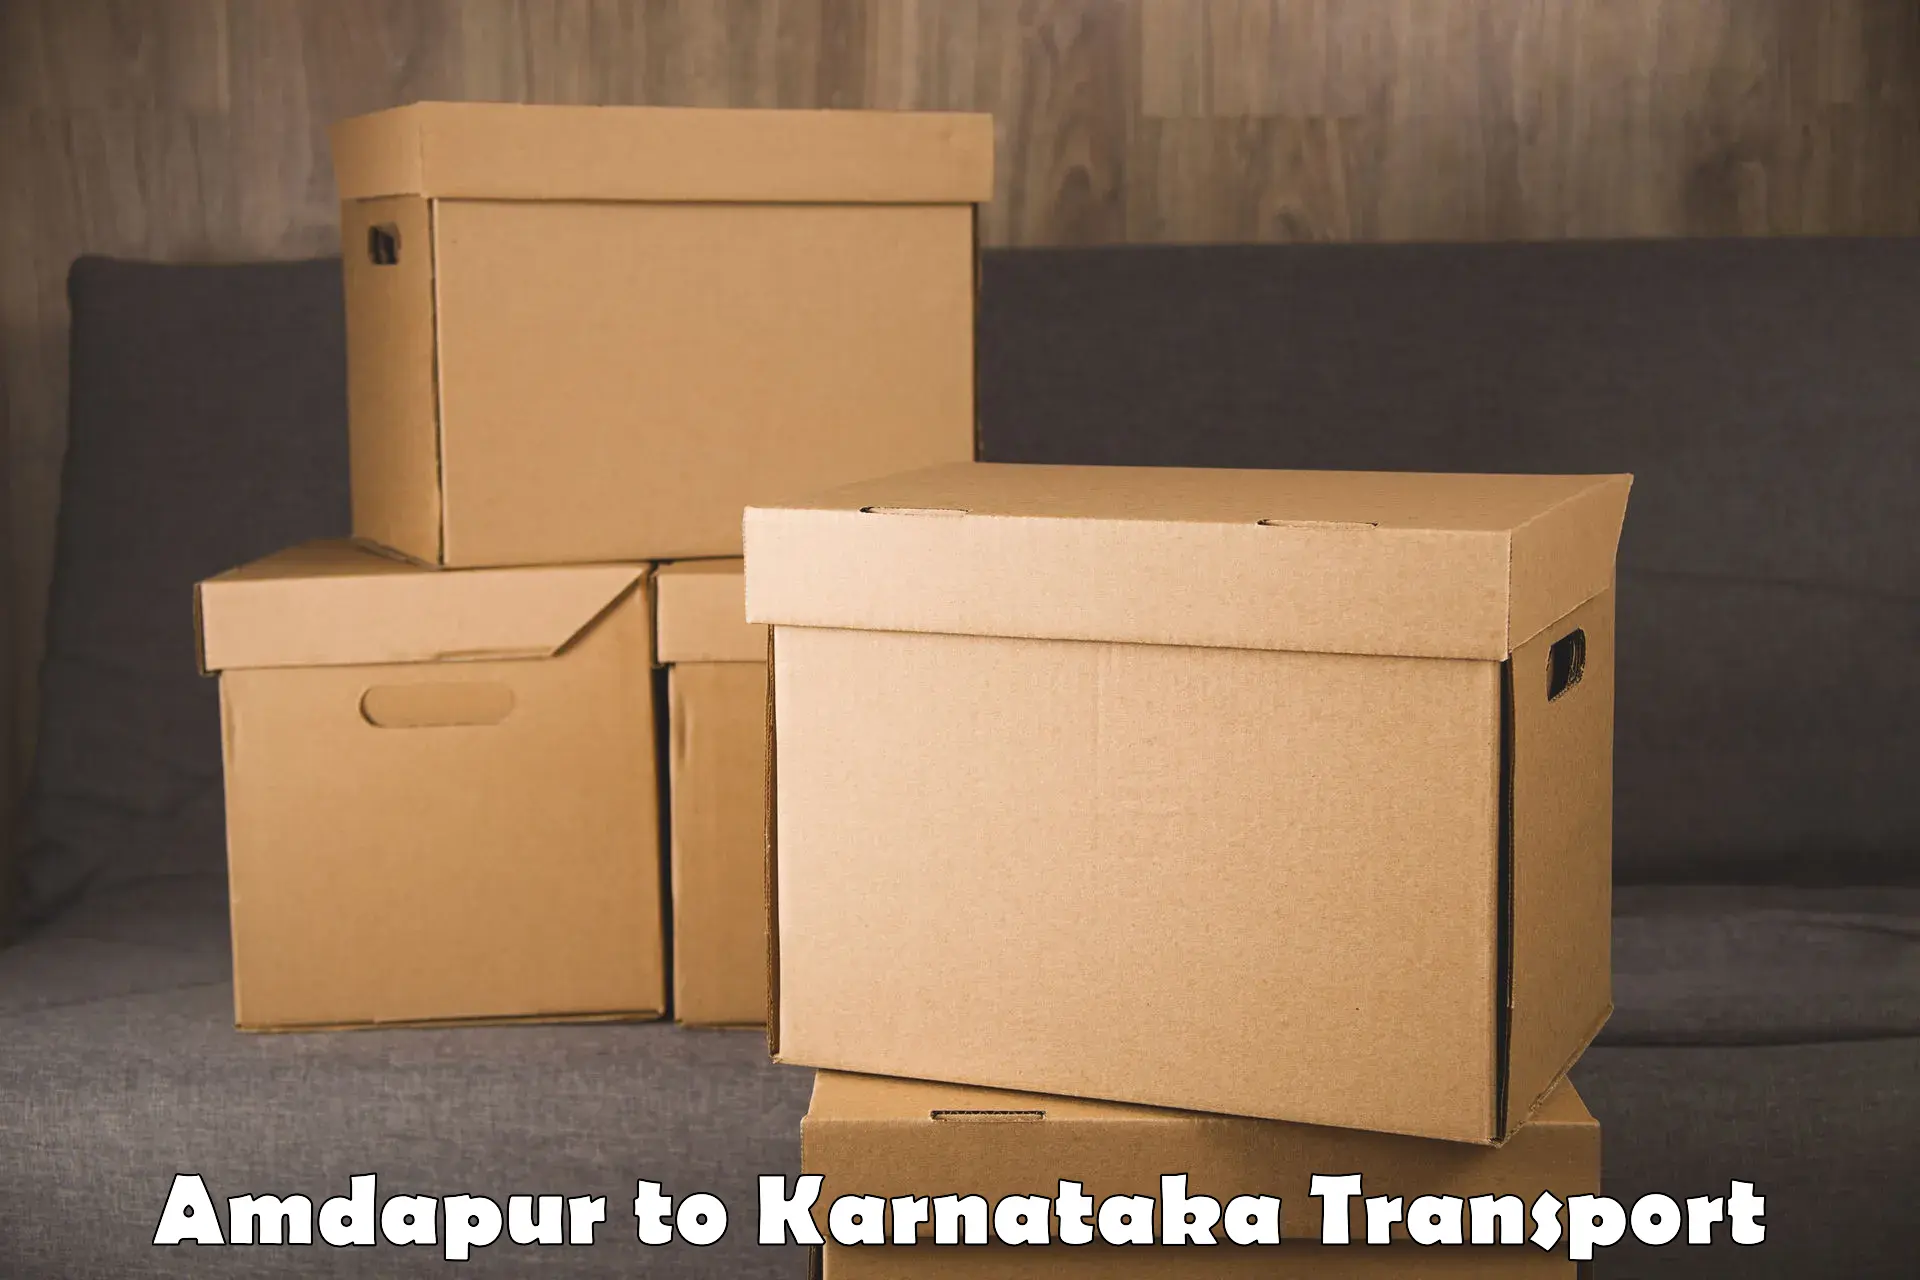 Transport in sharing Amdapur to Kollegal